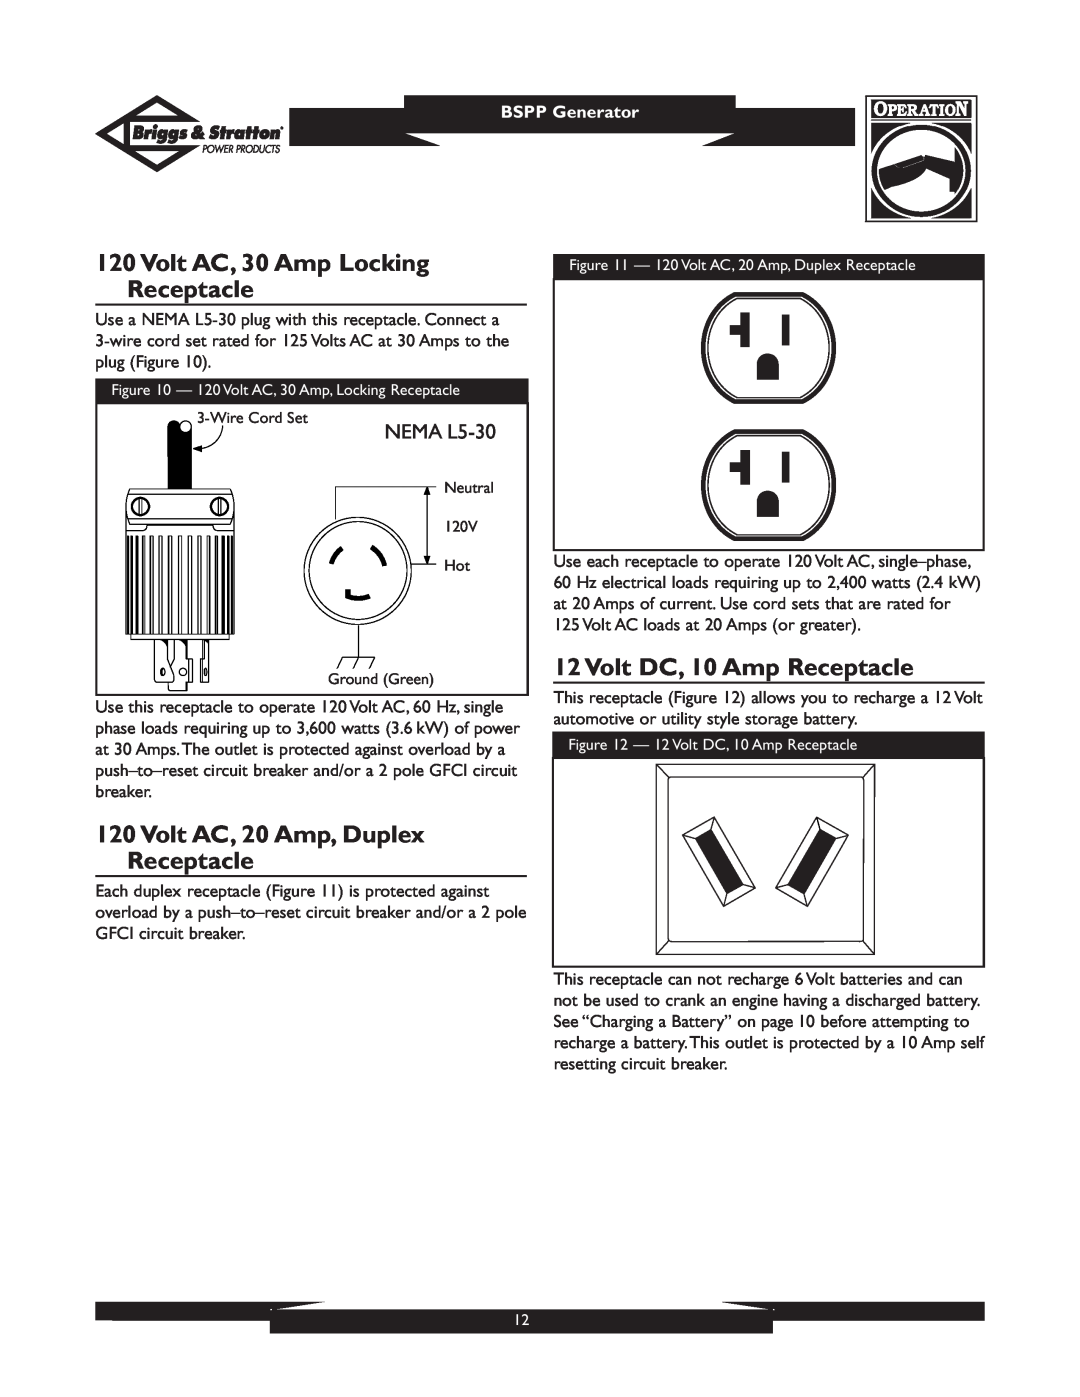 Briggs & Stratton PRO8000 owner manual Volt AC, 30 Amp Locking Receptacle, Volt AC, 20 Amp, Duplex Receptacle, NEMA L5-30 